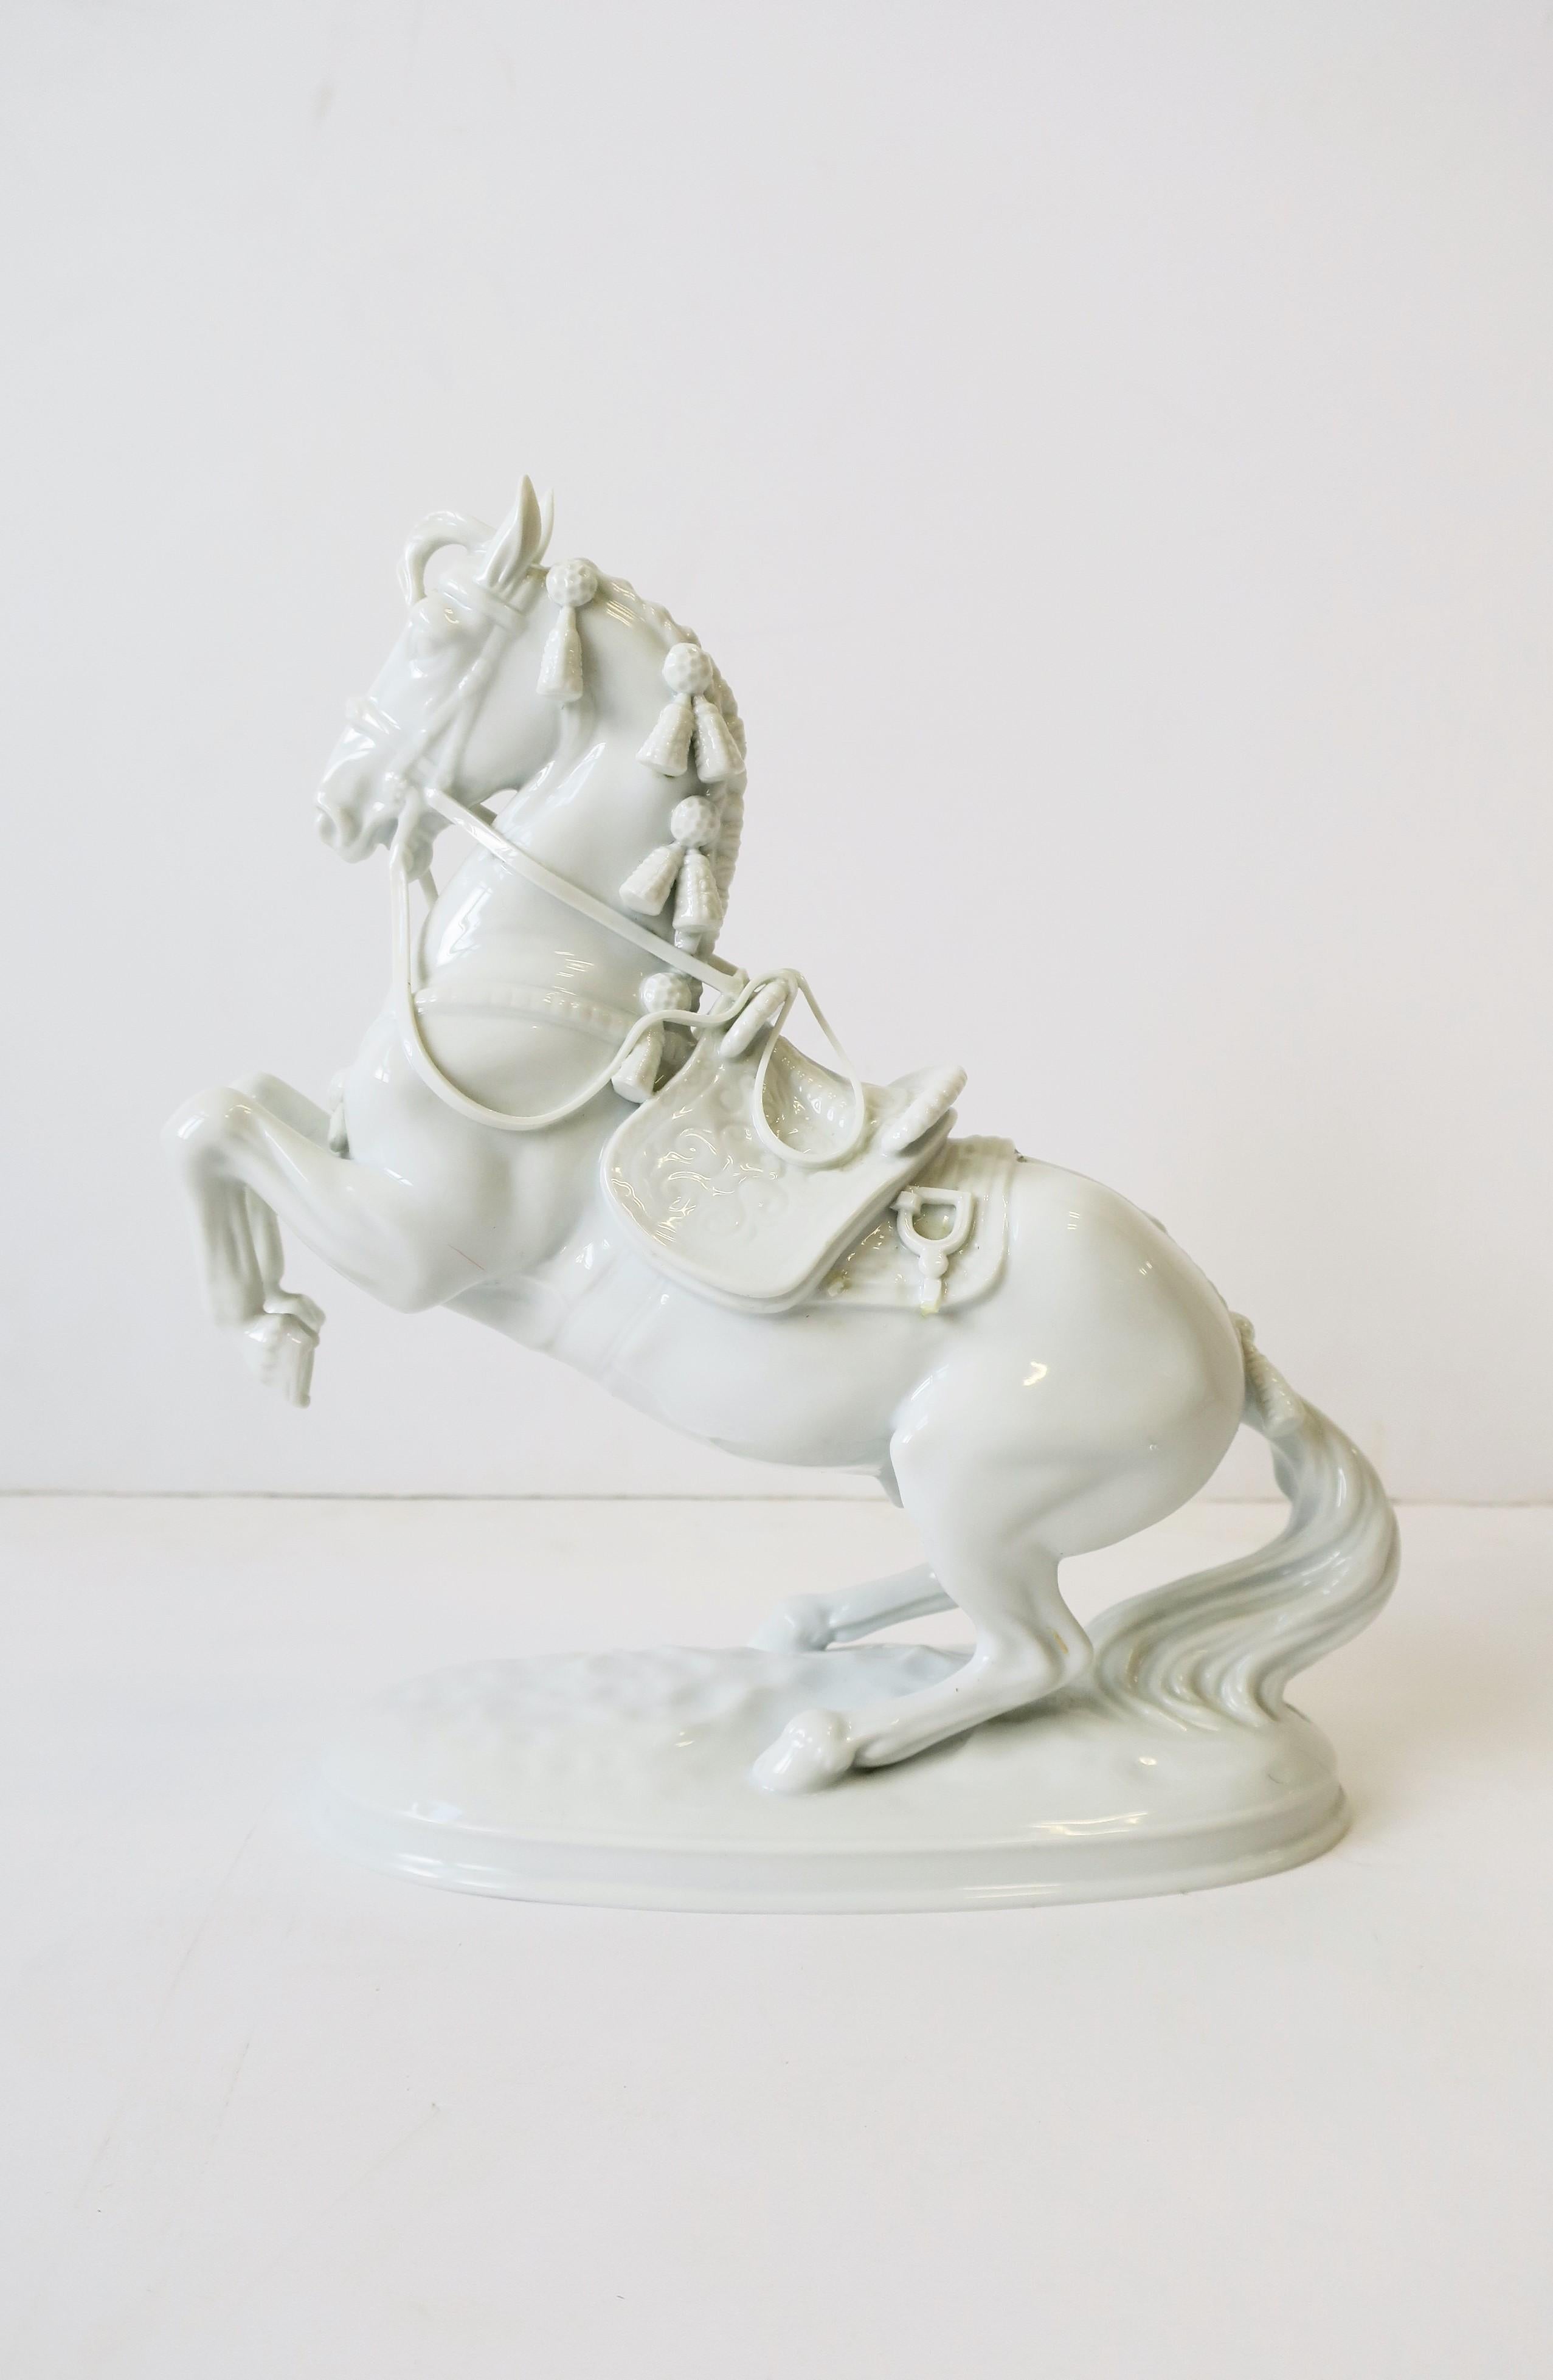 Glazed White Porcelain Equine Horse Sculpture Decorative Object from Austria 